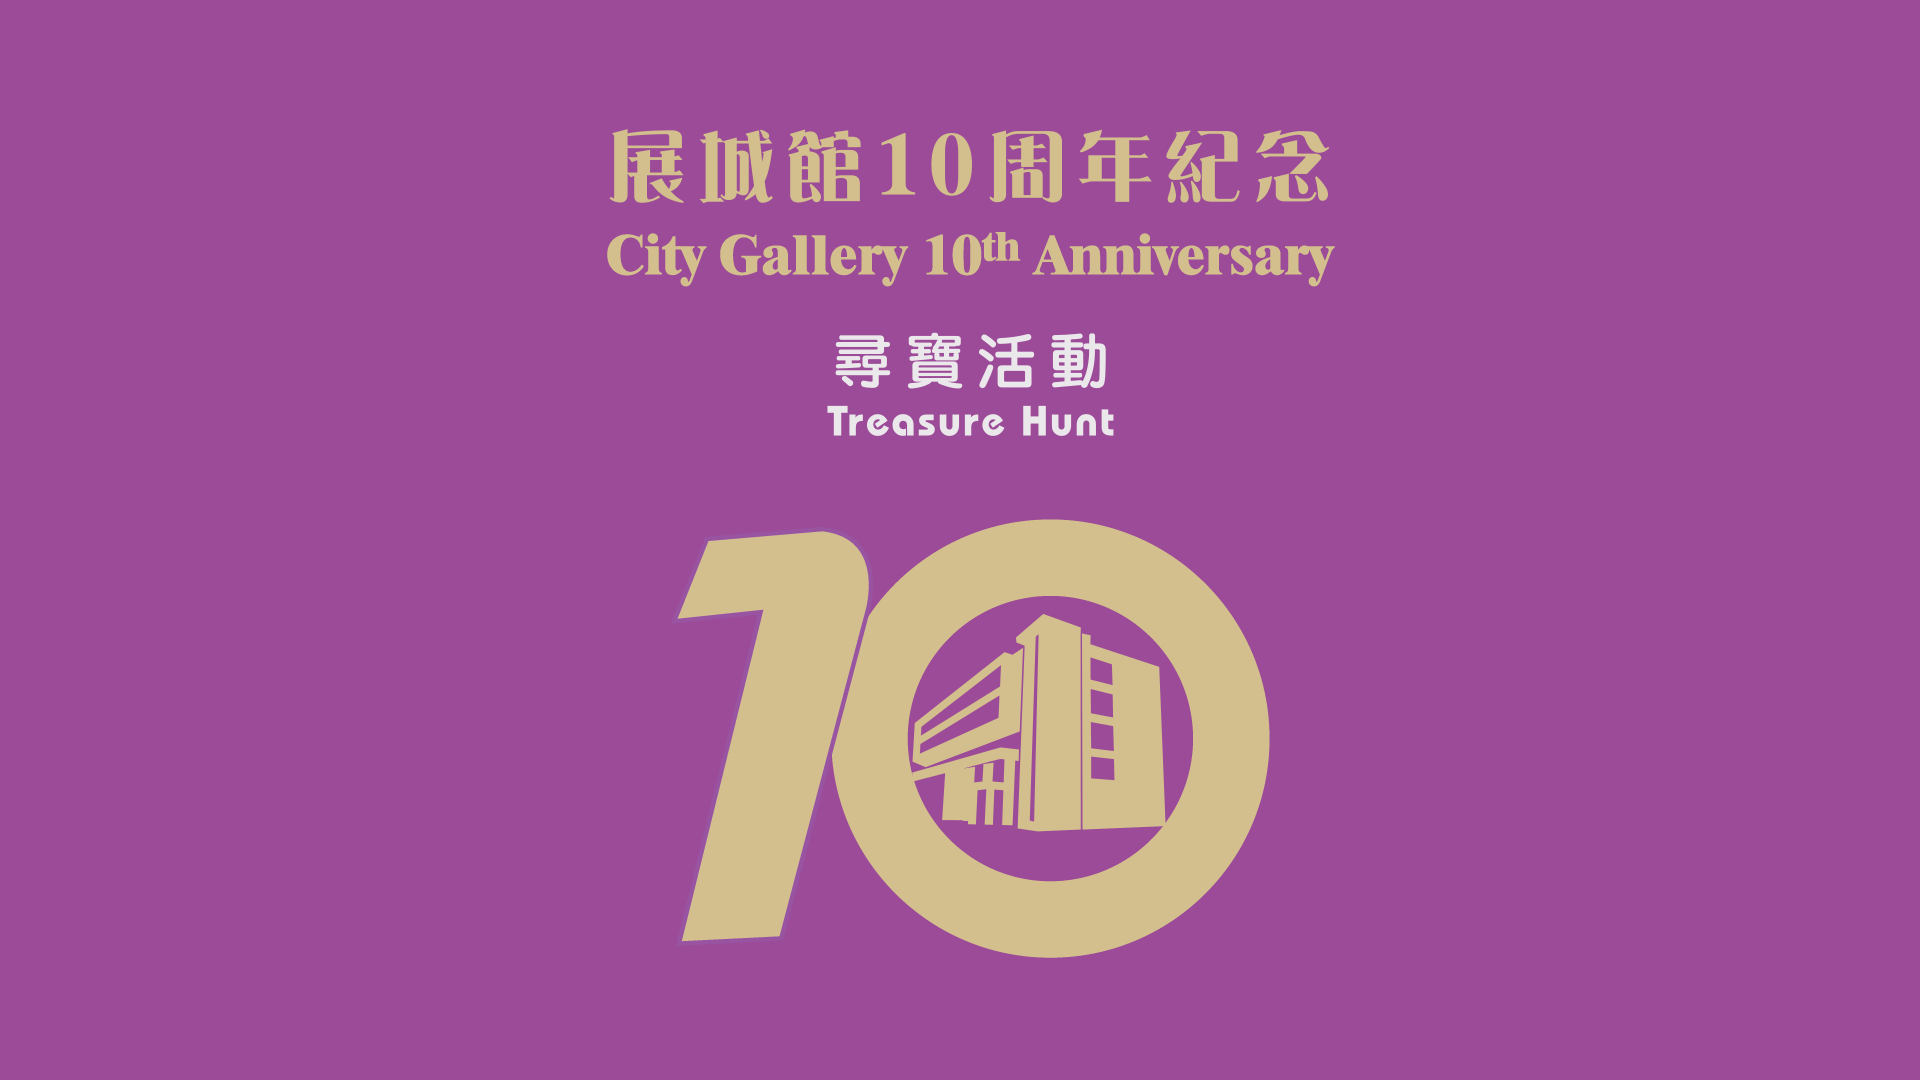 City Gallery 10th Anniversary Treasure Hunt